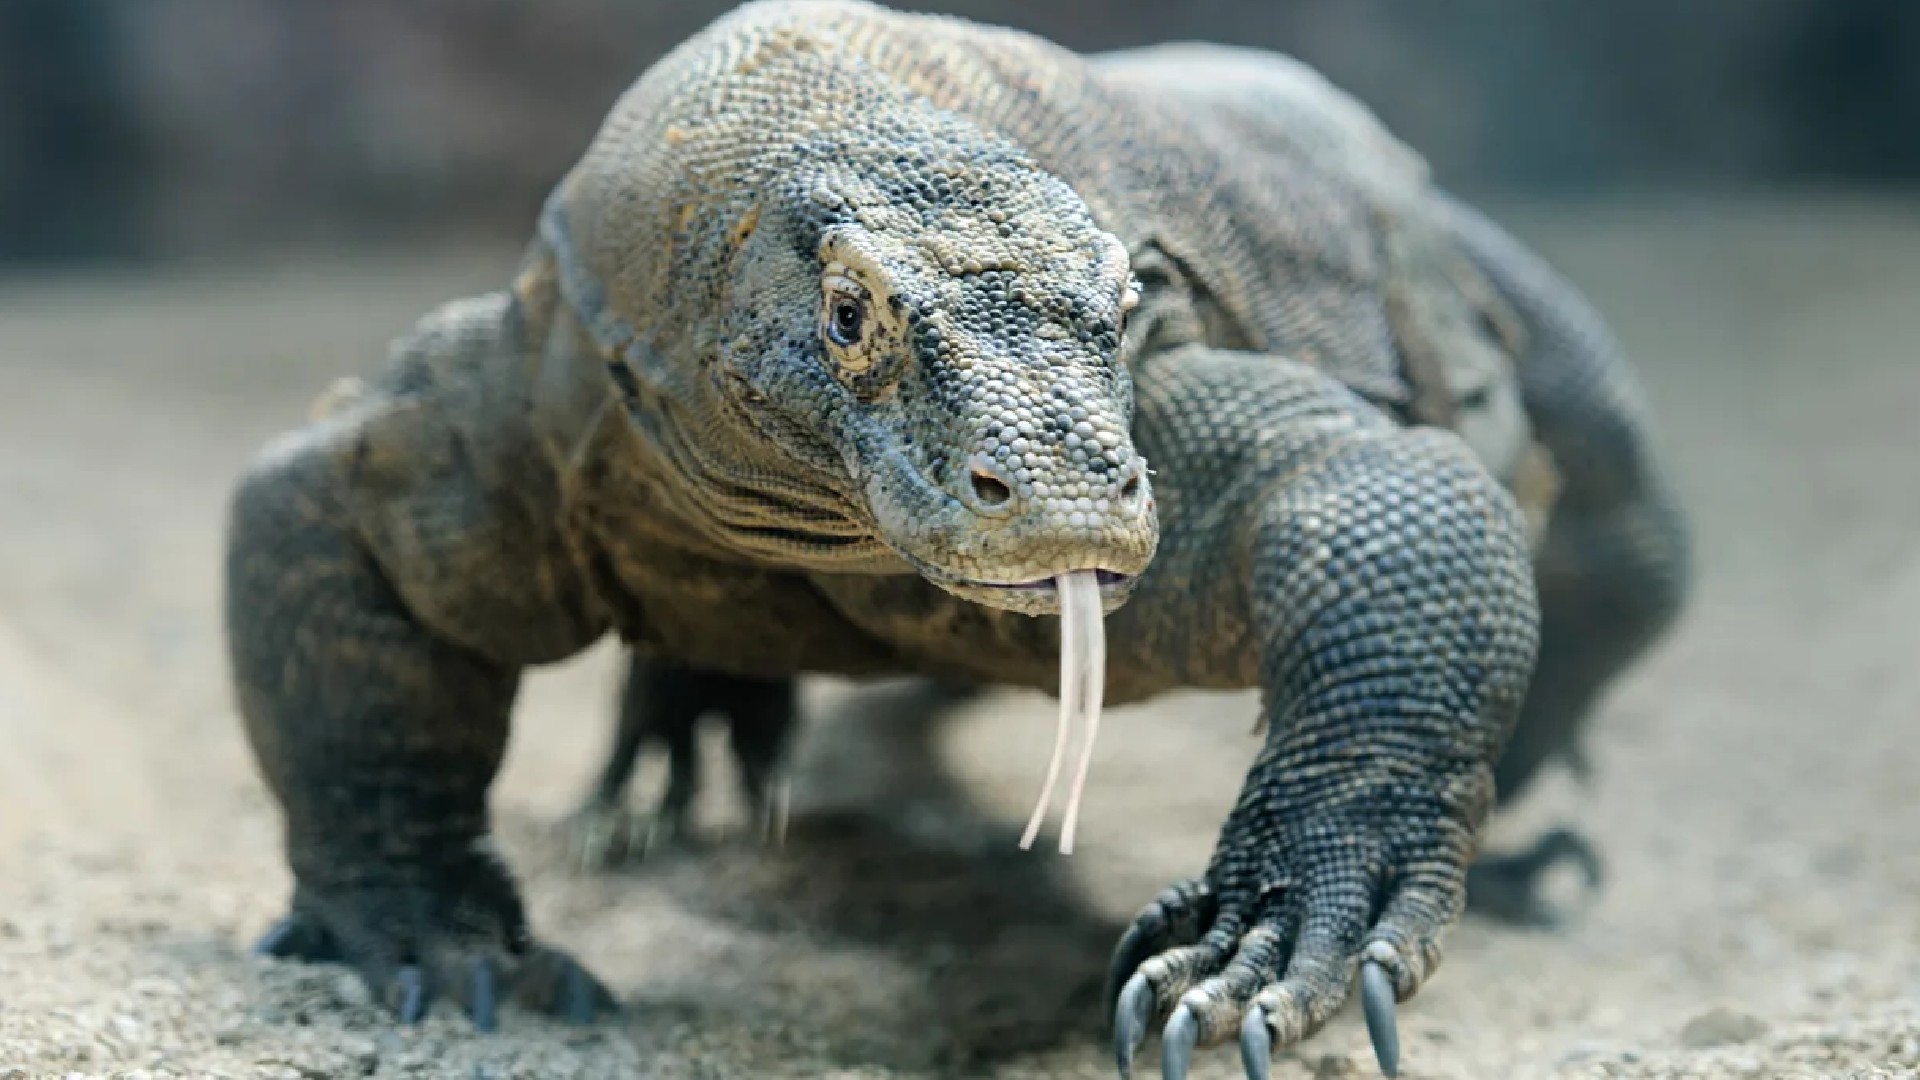 The Komodo Dragon is in danger of extinction.